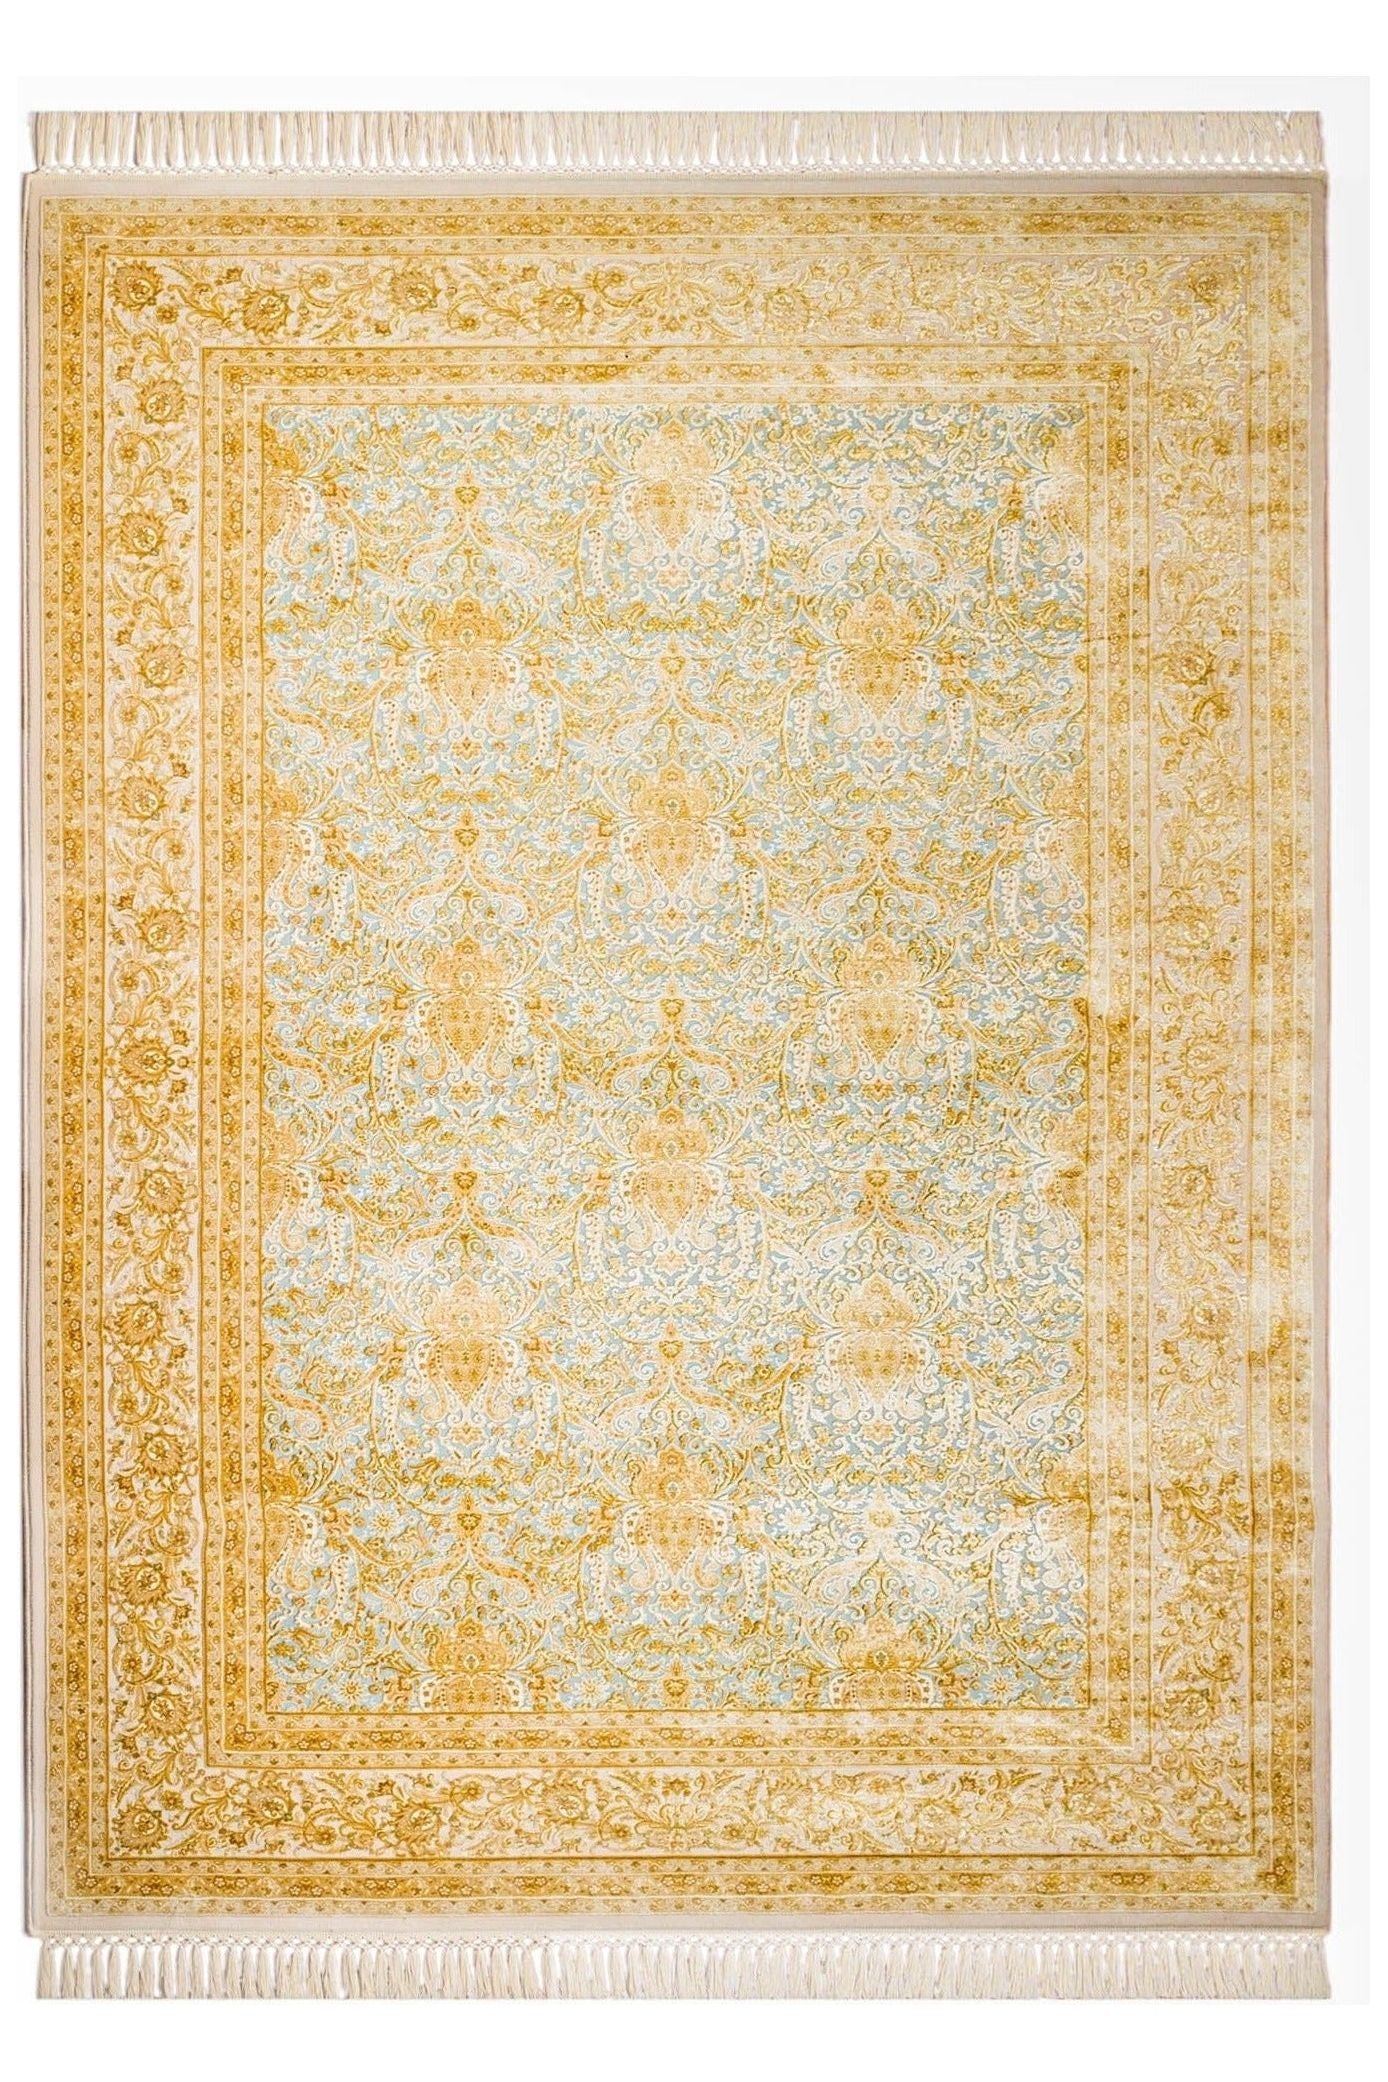 #Turkish_Carpets_Rugs# #Modern_Carpets# #Abrash_Carpets#Abrash-18005275-230x160